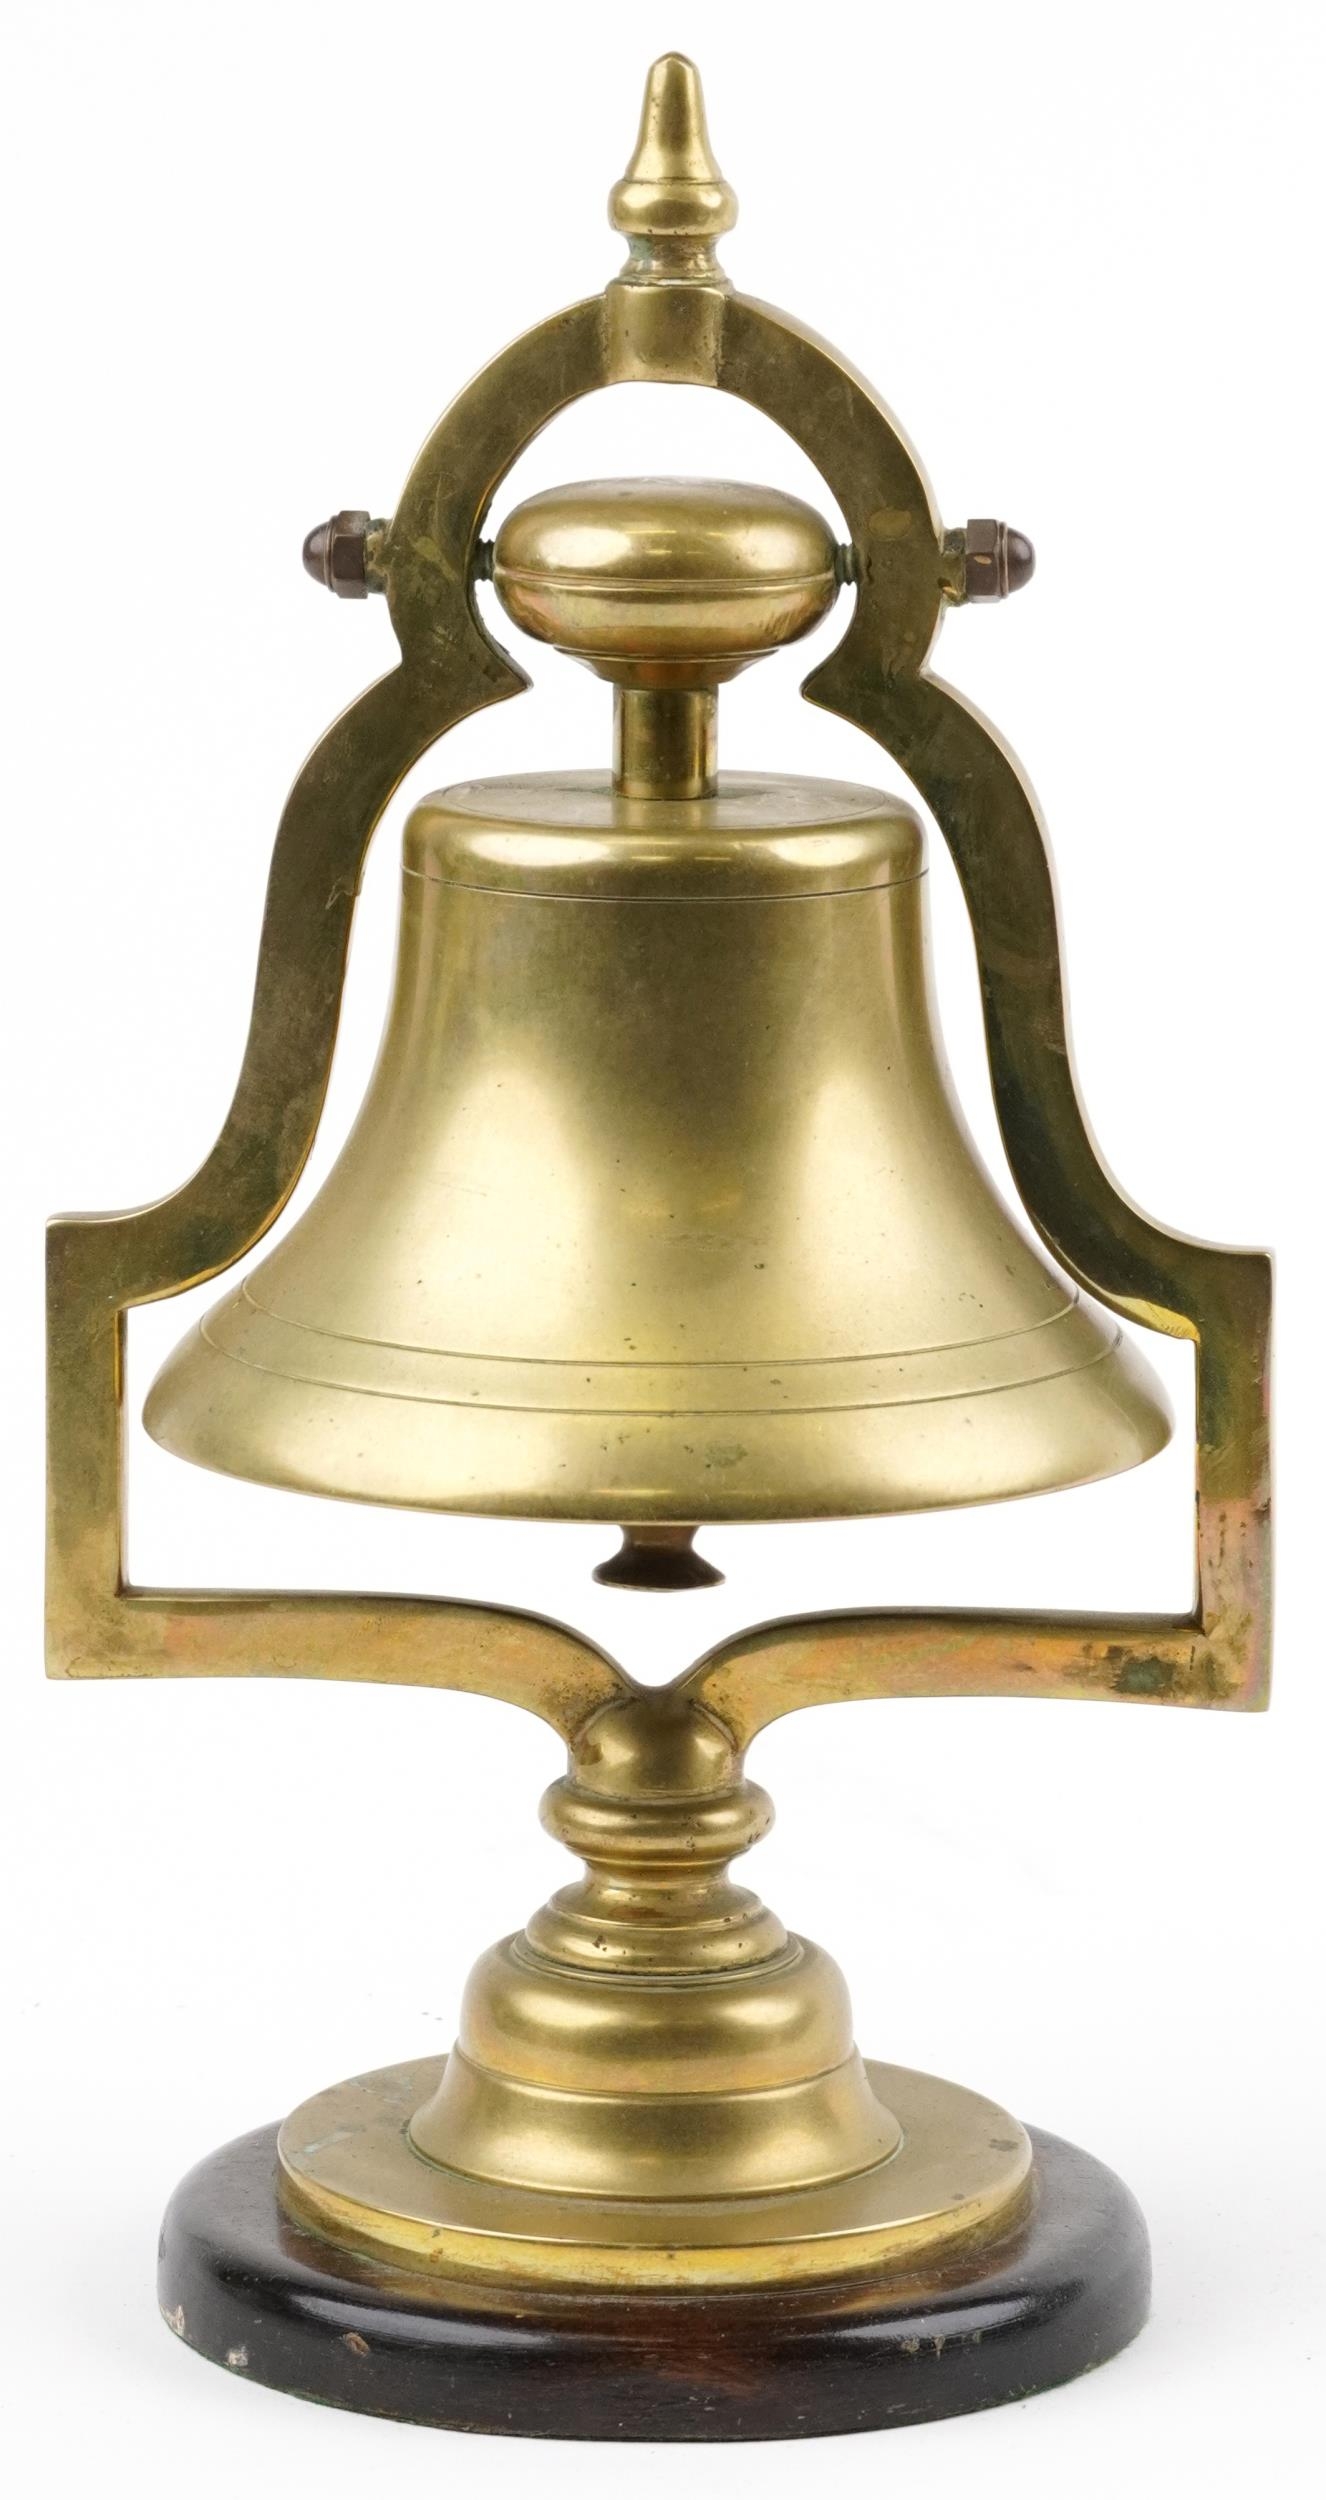 19th/20th century railwayana interest brass railroad bell raised on a circular mahogany base, 34cm